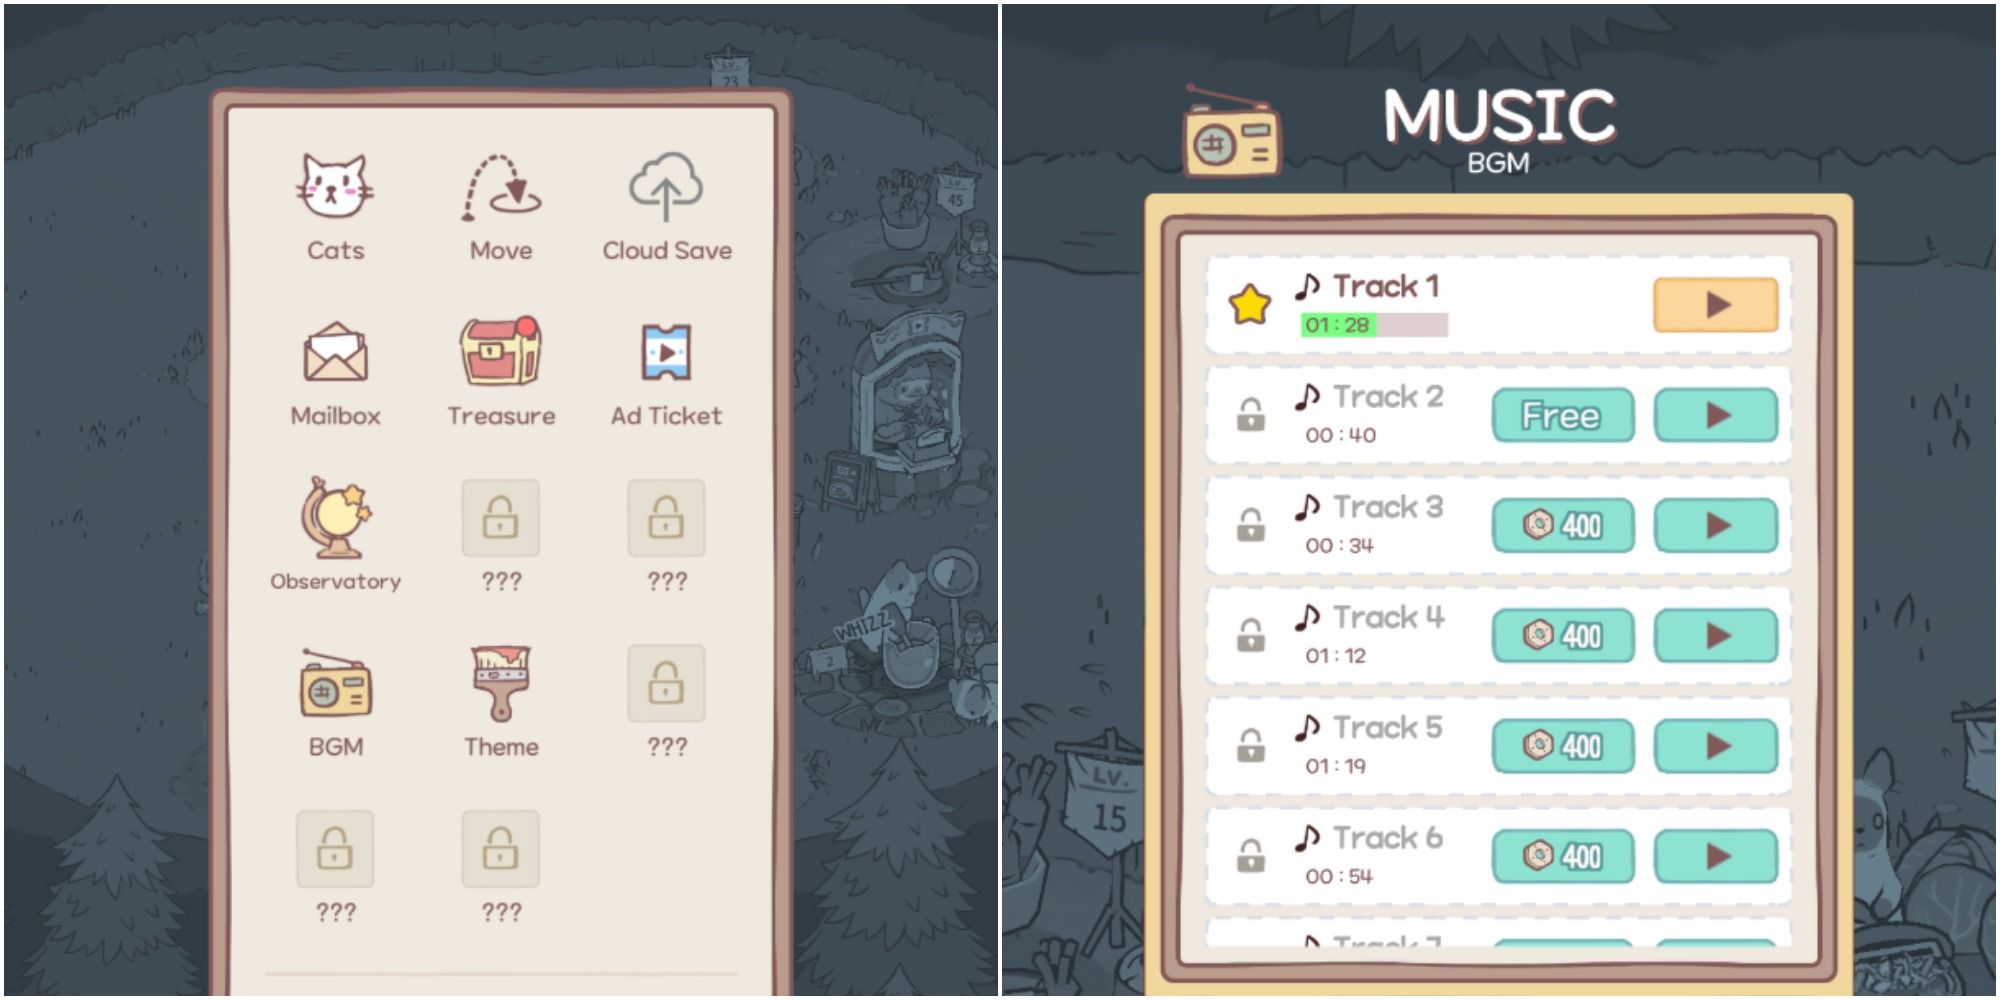 Split image of Cats & Soup menu and Music player menu